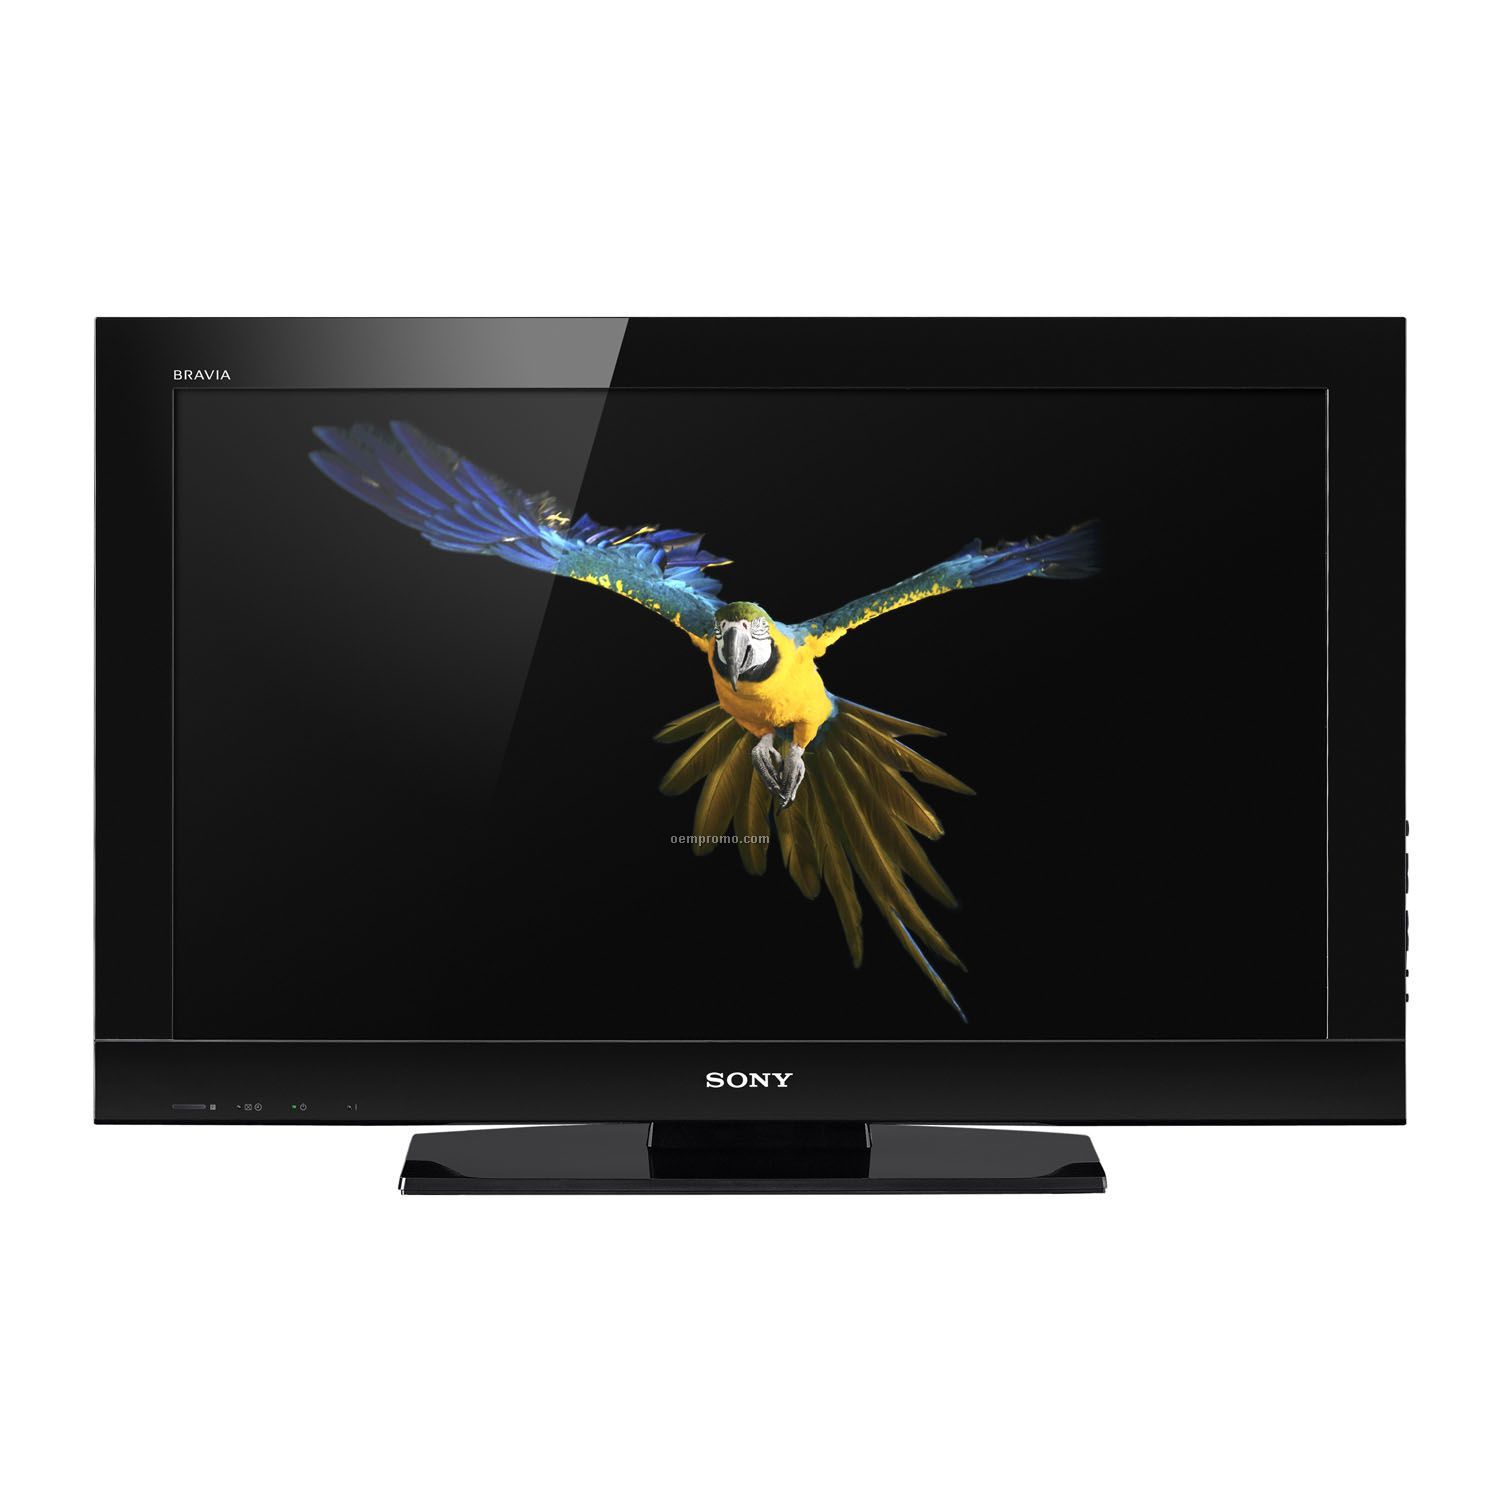 Sony 22" Bravia Bx300 Hd Lcd Tv, 720p